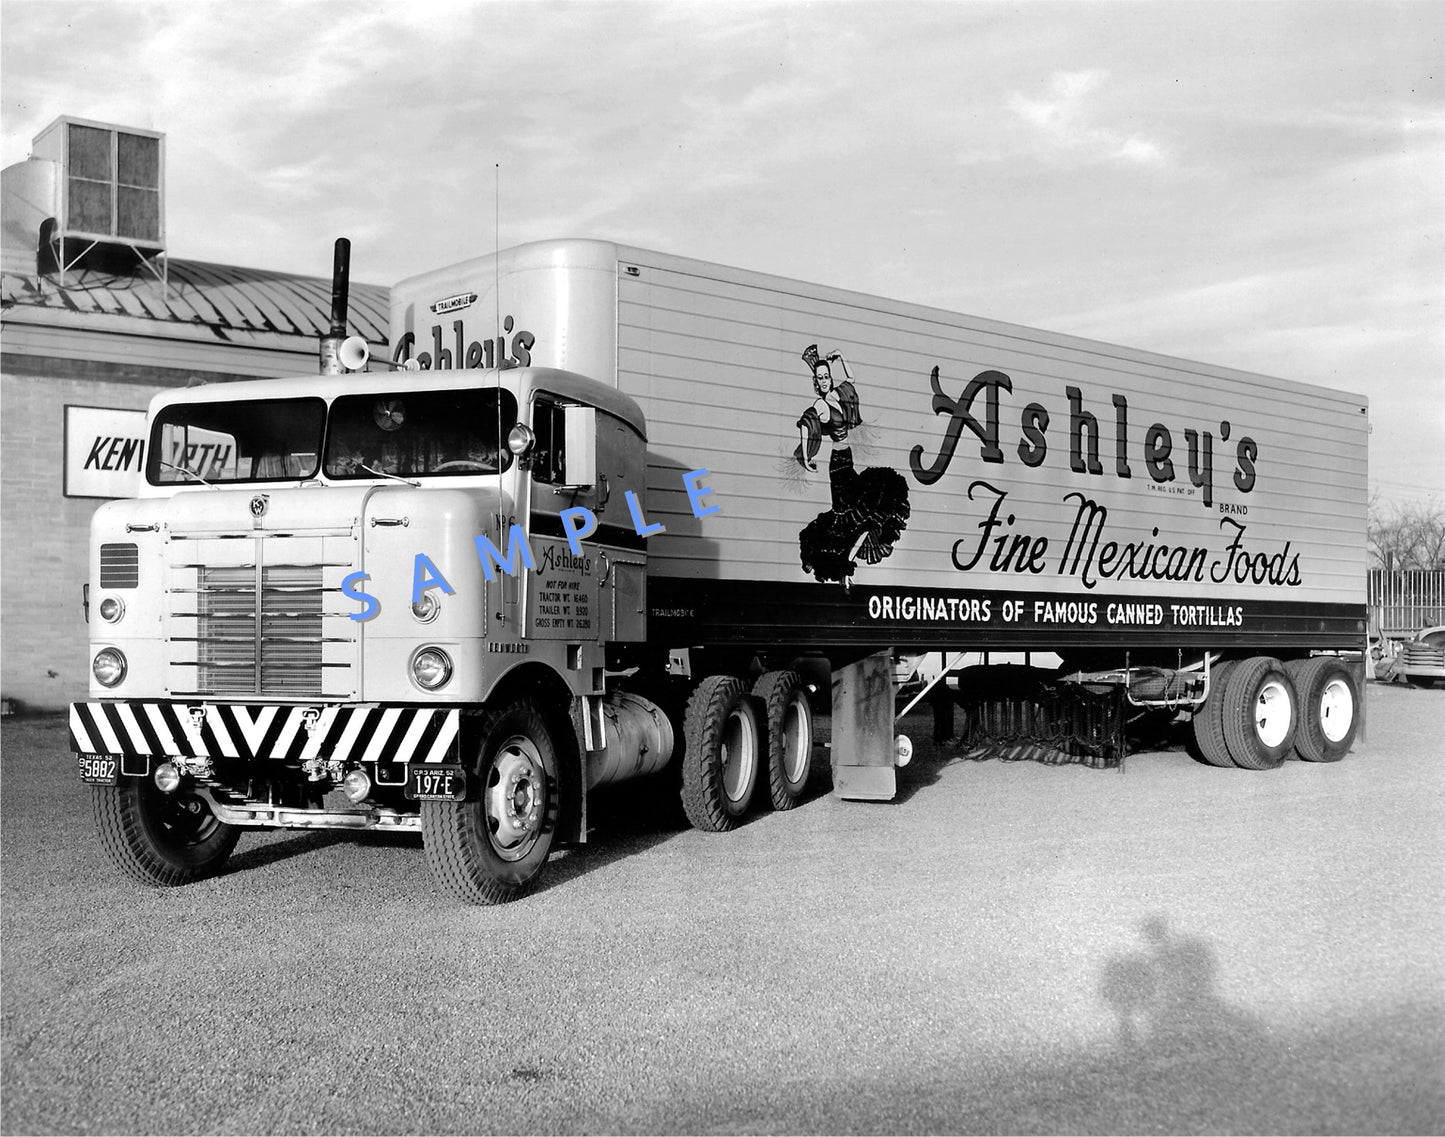 8 X 10 B & W semi-truck photo BULLNOSE KW ASHLEY'S - Transportation Treasure